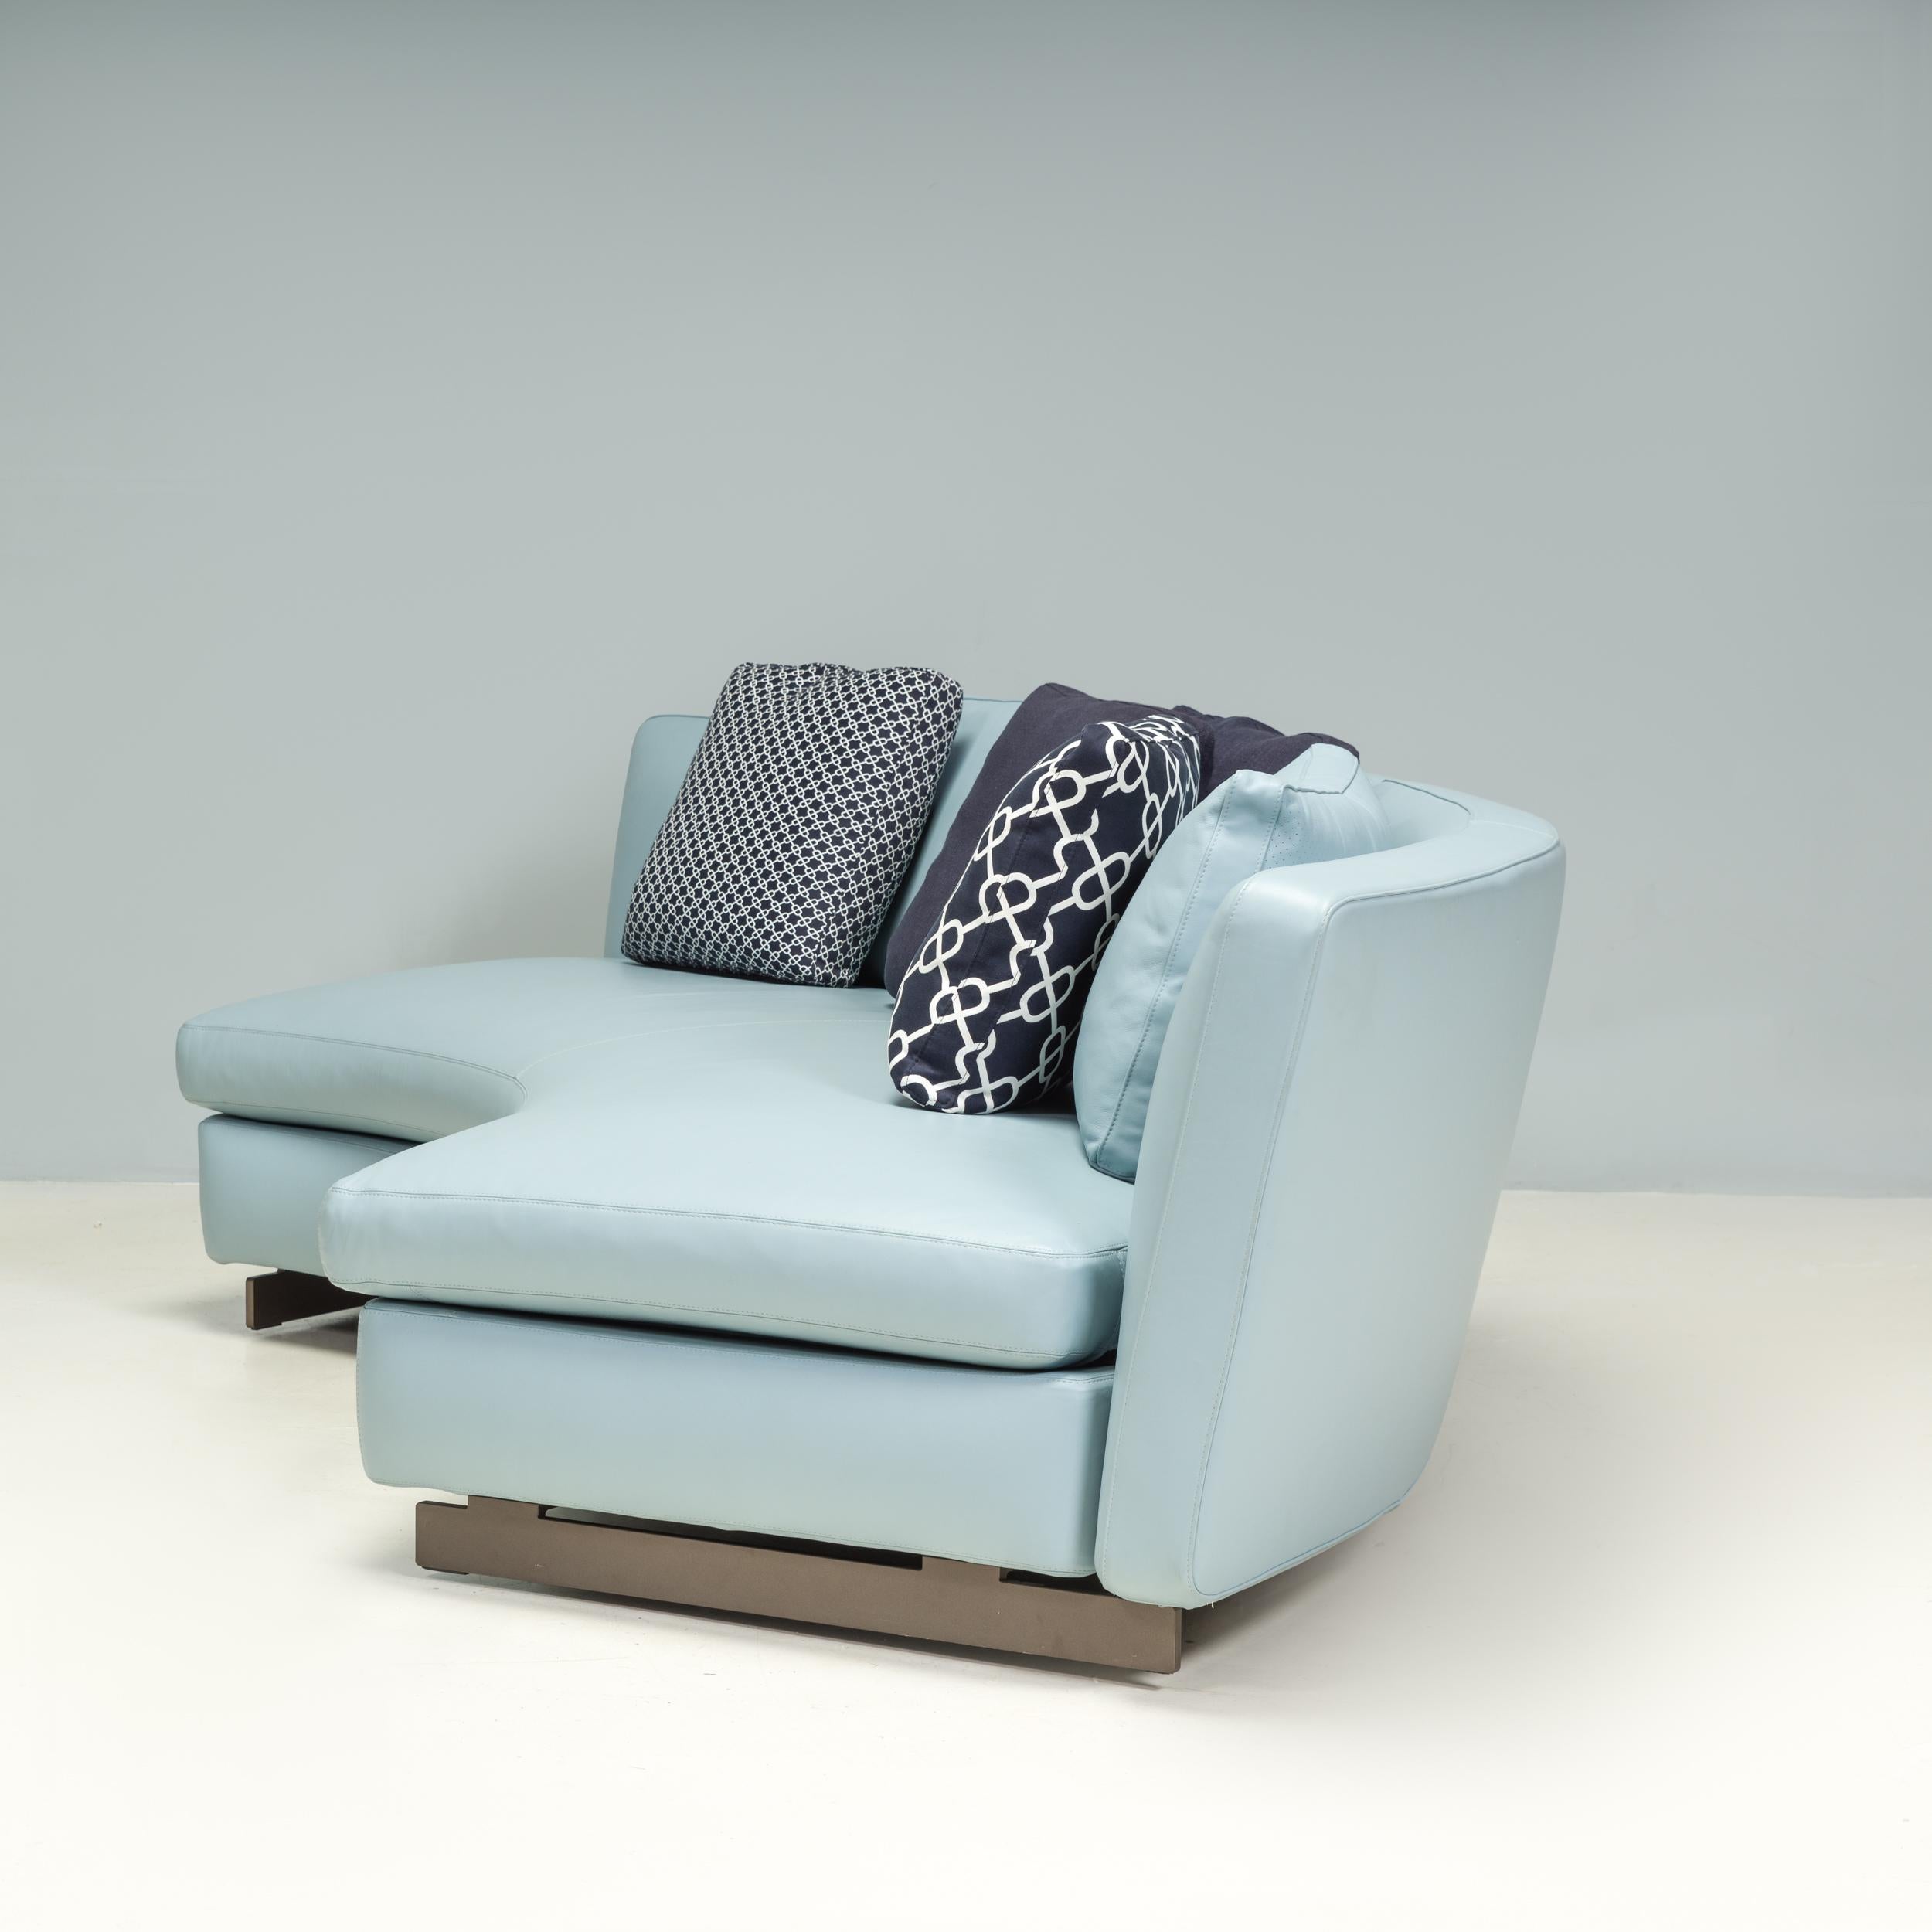  Rodolfo Dordoni for Minotti Blue Leather Seymour Low 01 Sofa In Good Condition For Sale In London, GB